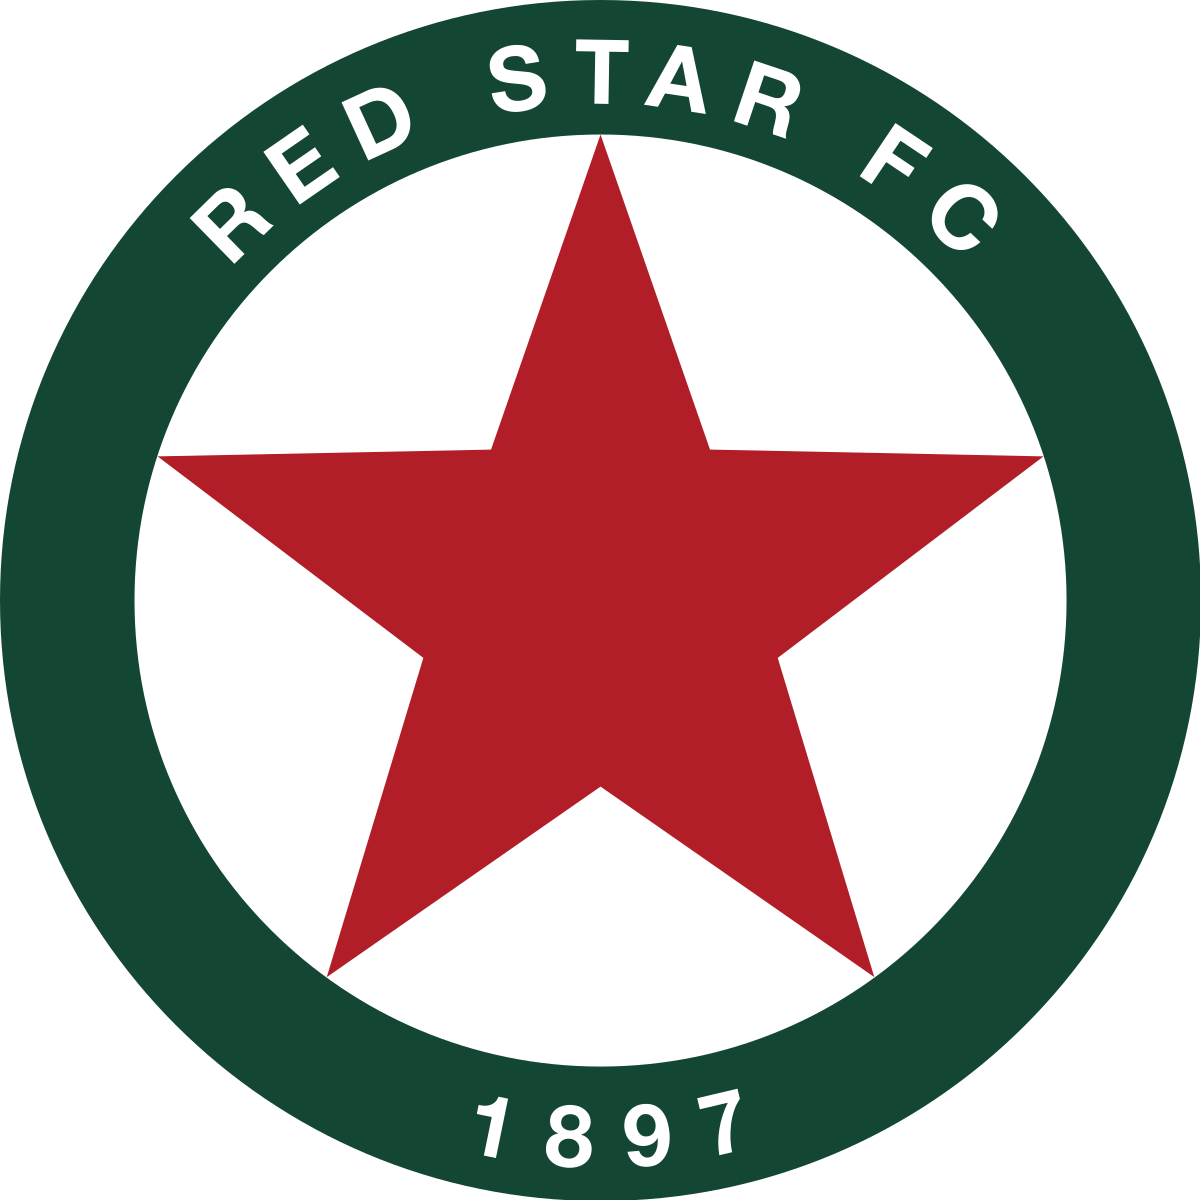 Red Star Belgrade - Wikipedia